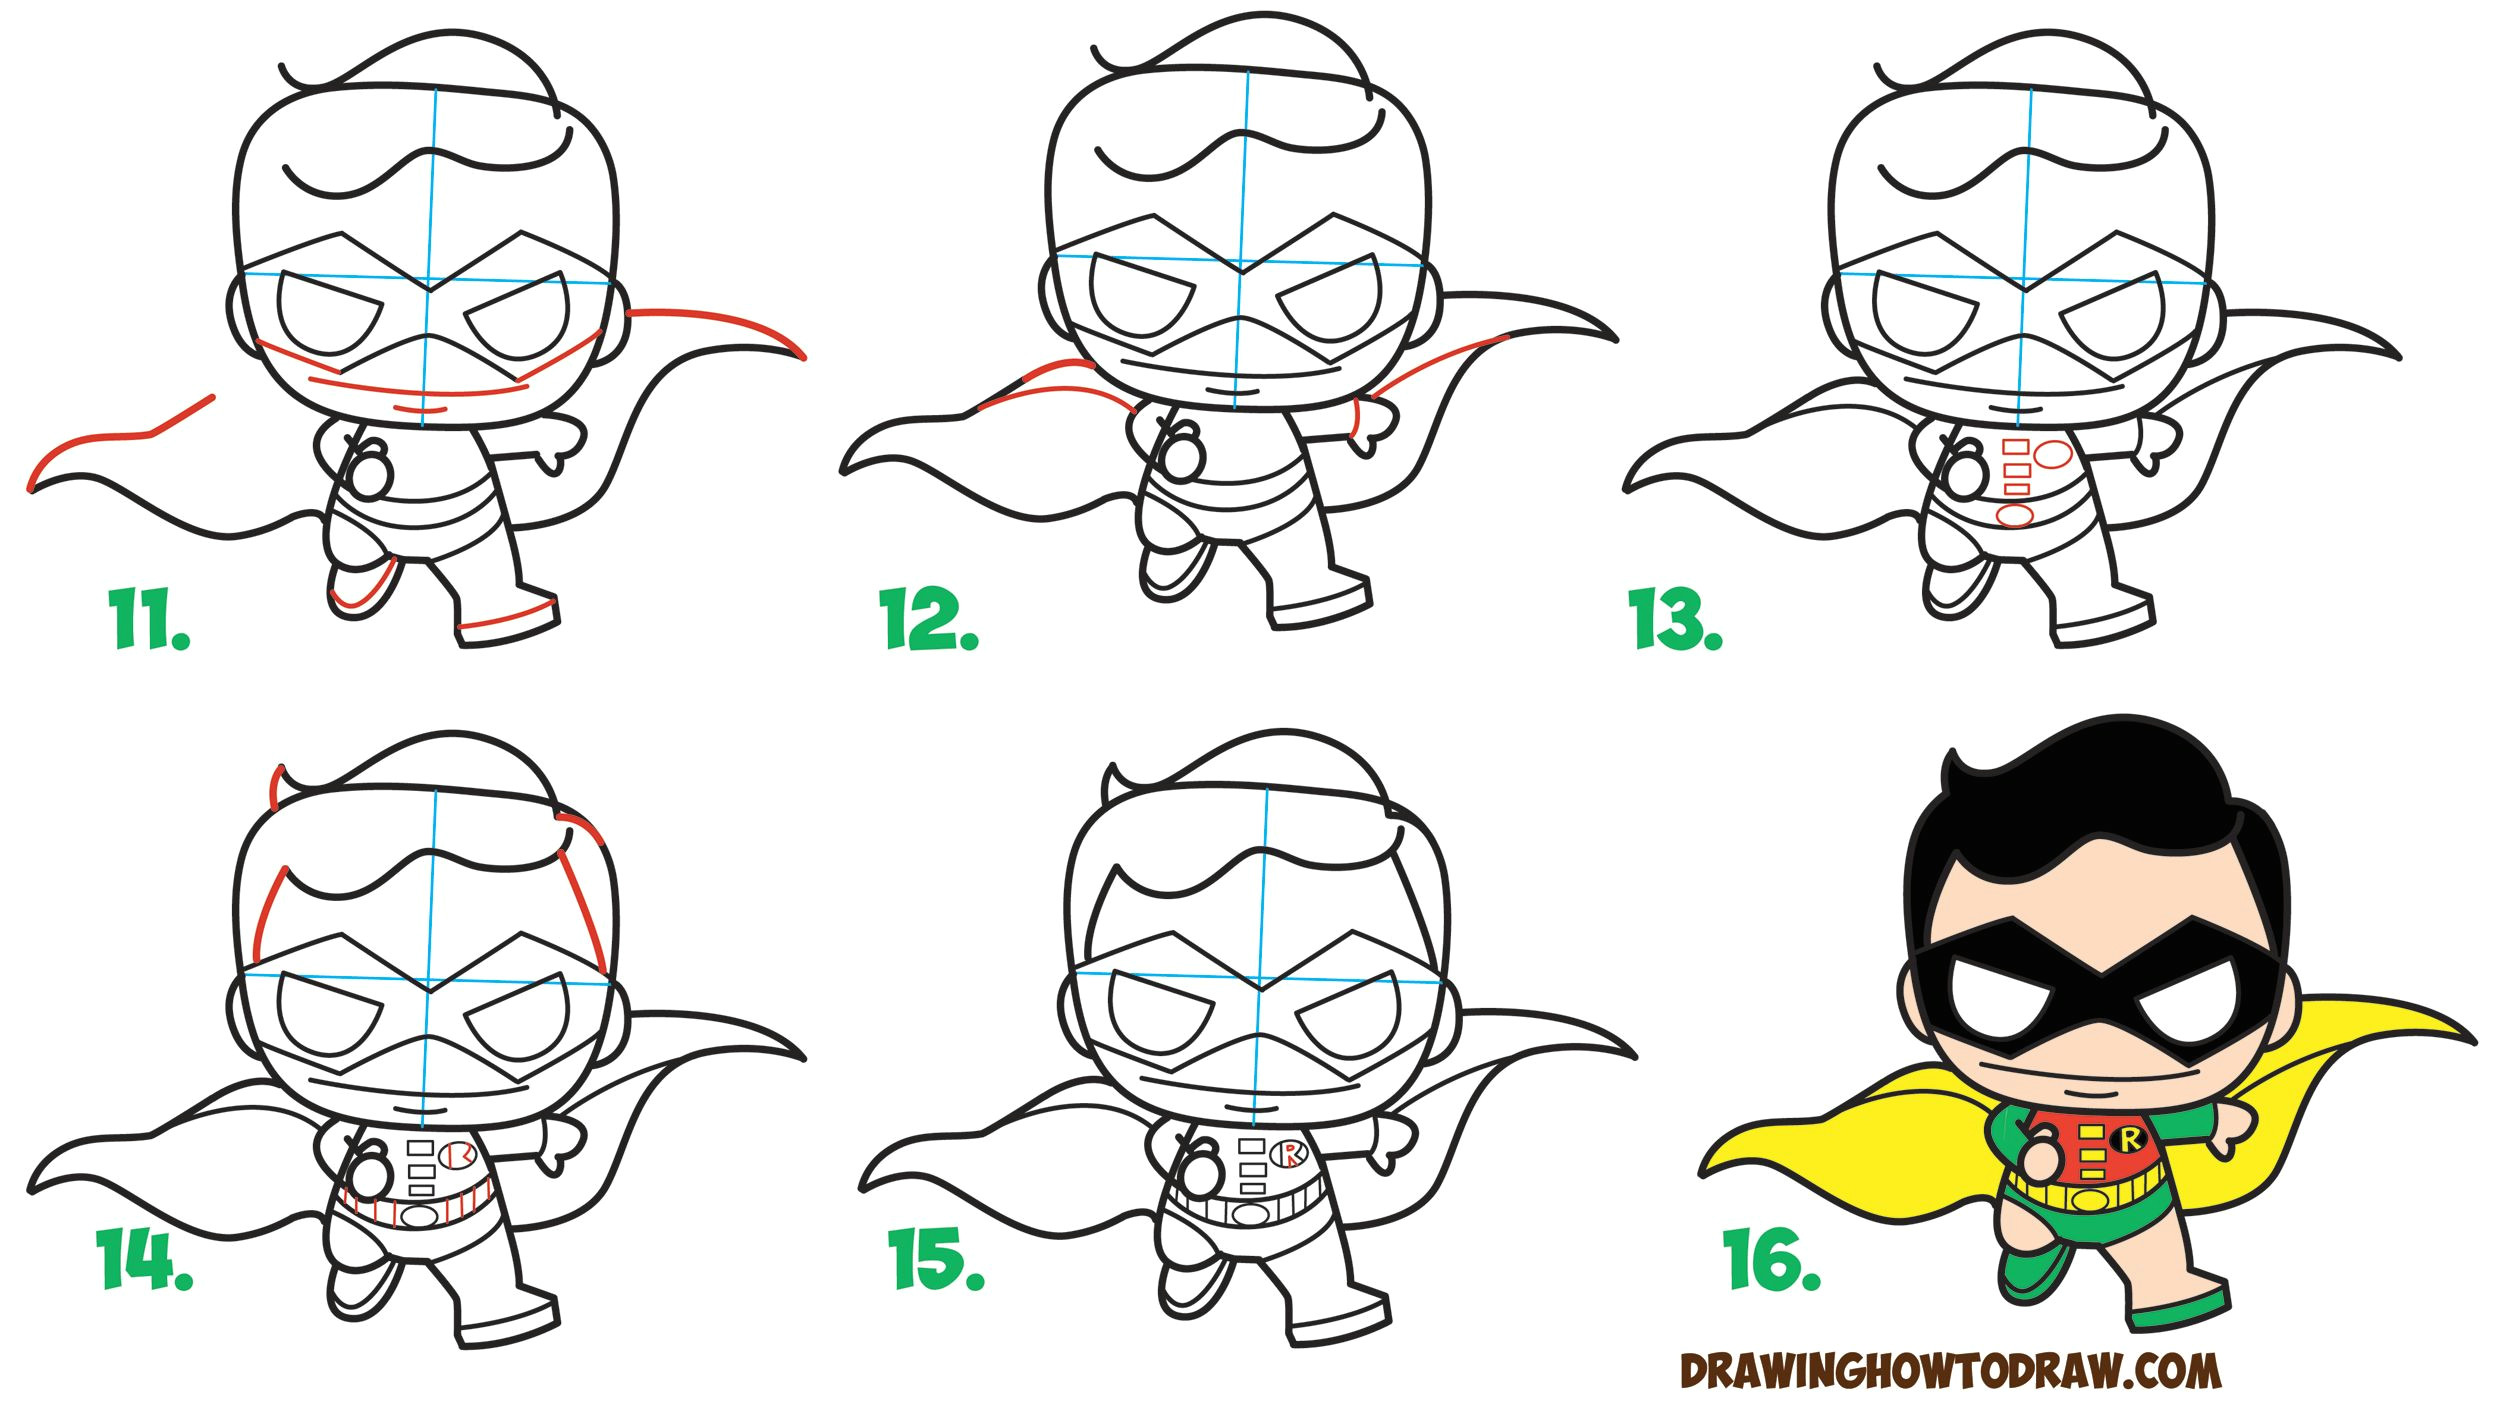 Drawing A Cartoon Batman How to Draw Cute Kawaii Chibi Robin From Dc Comics Batman